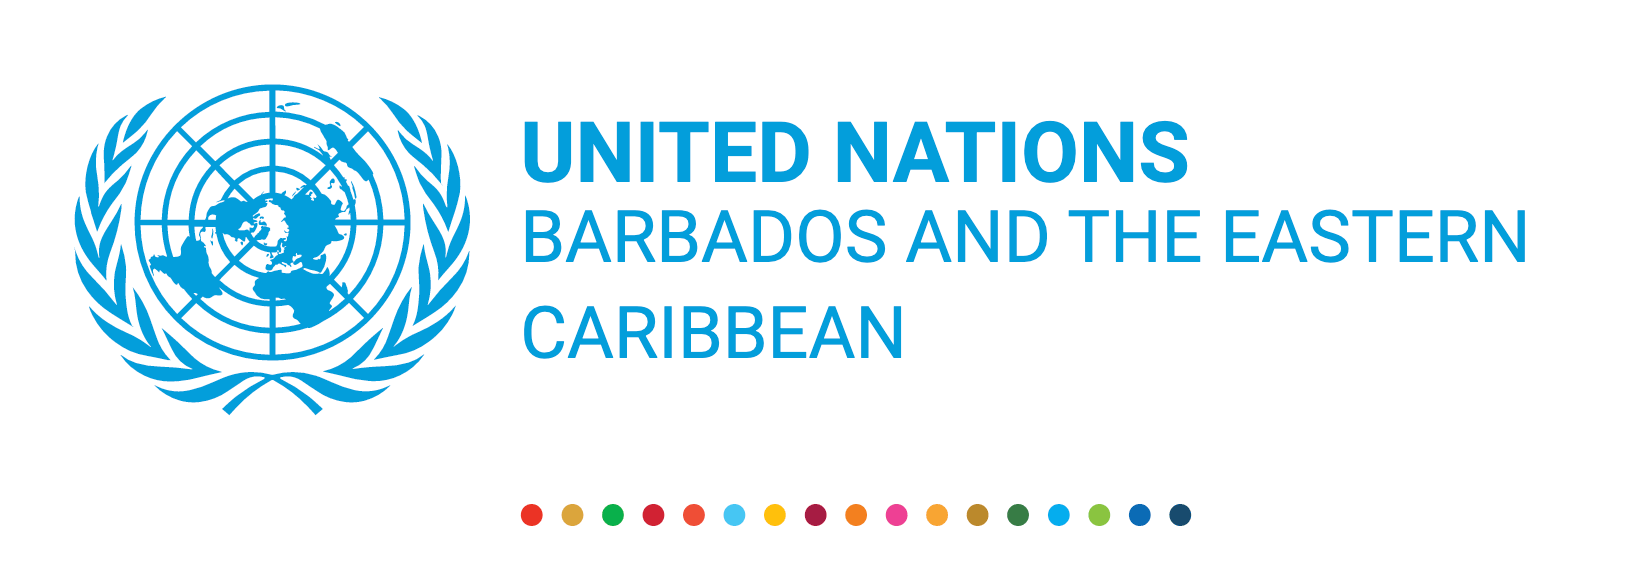 United Nations Barbados logo